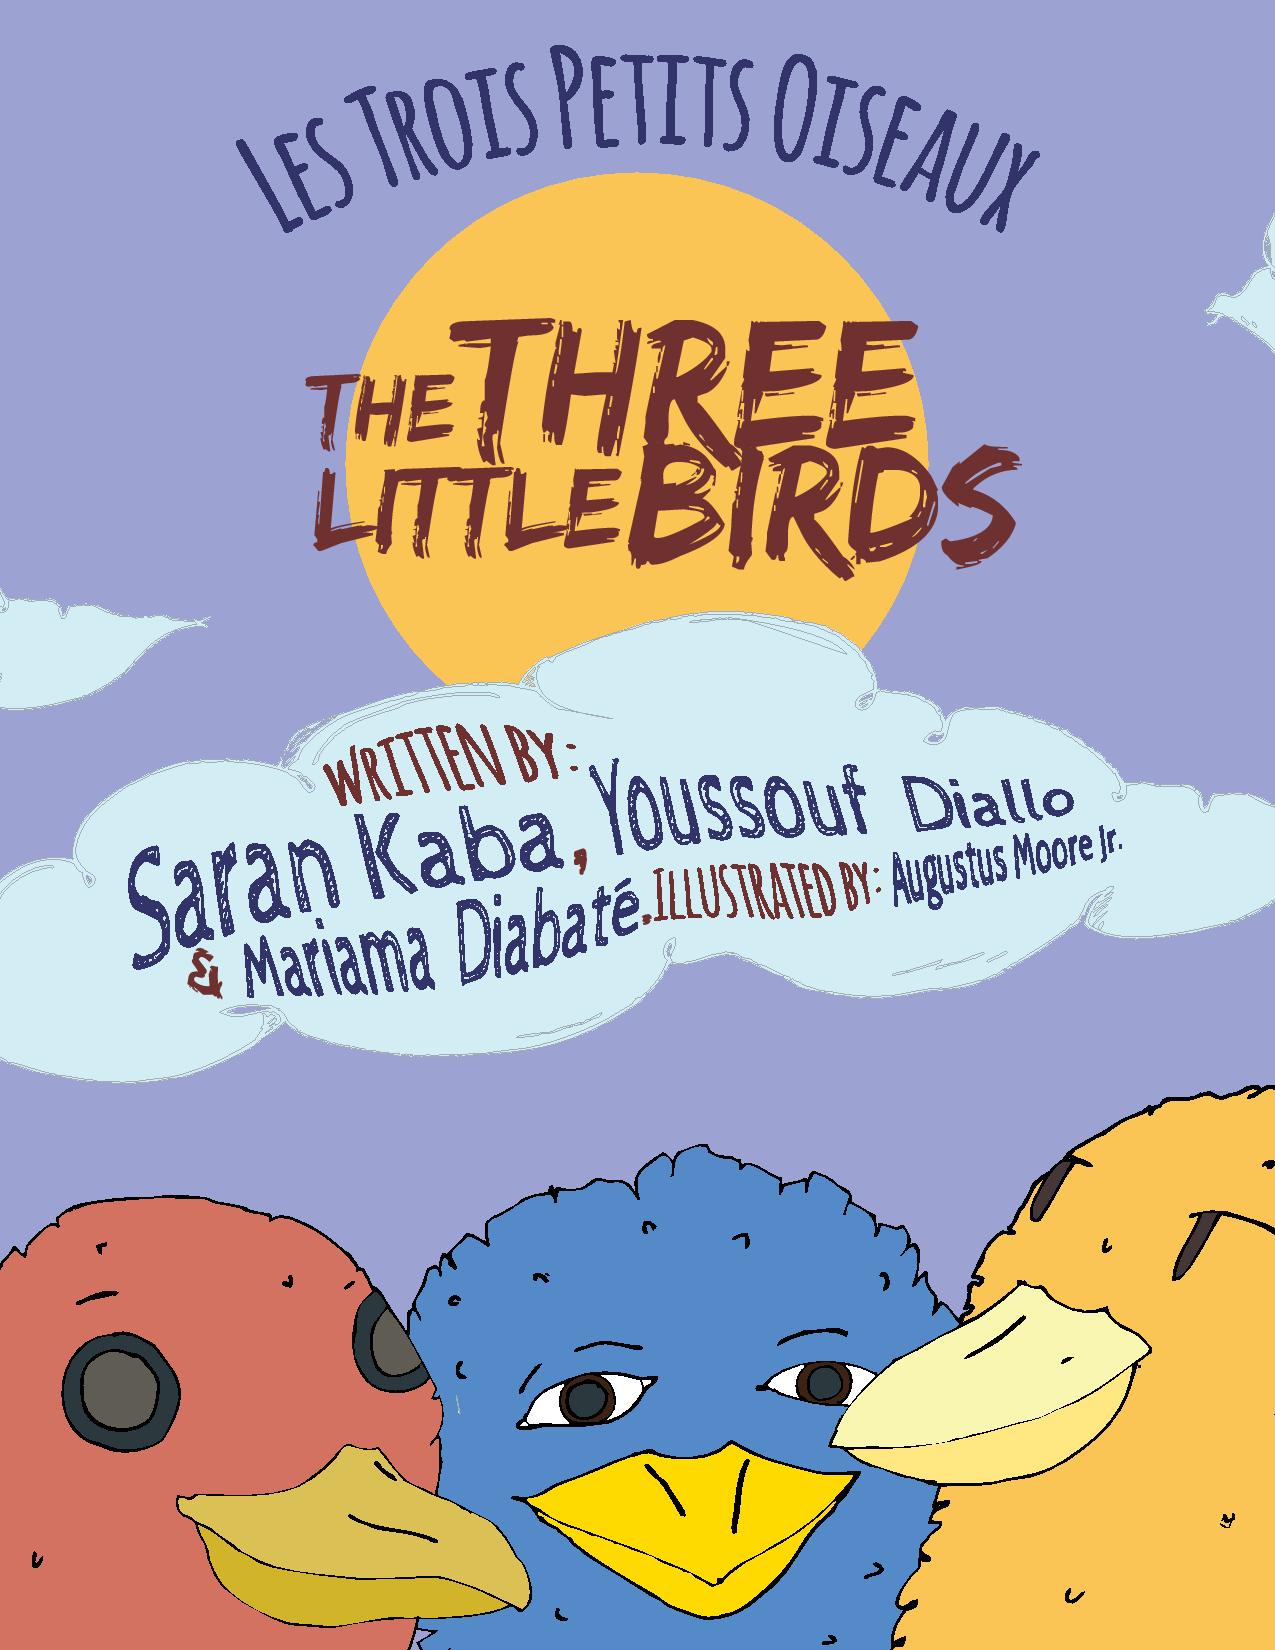 The Three Little Birds